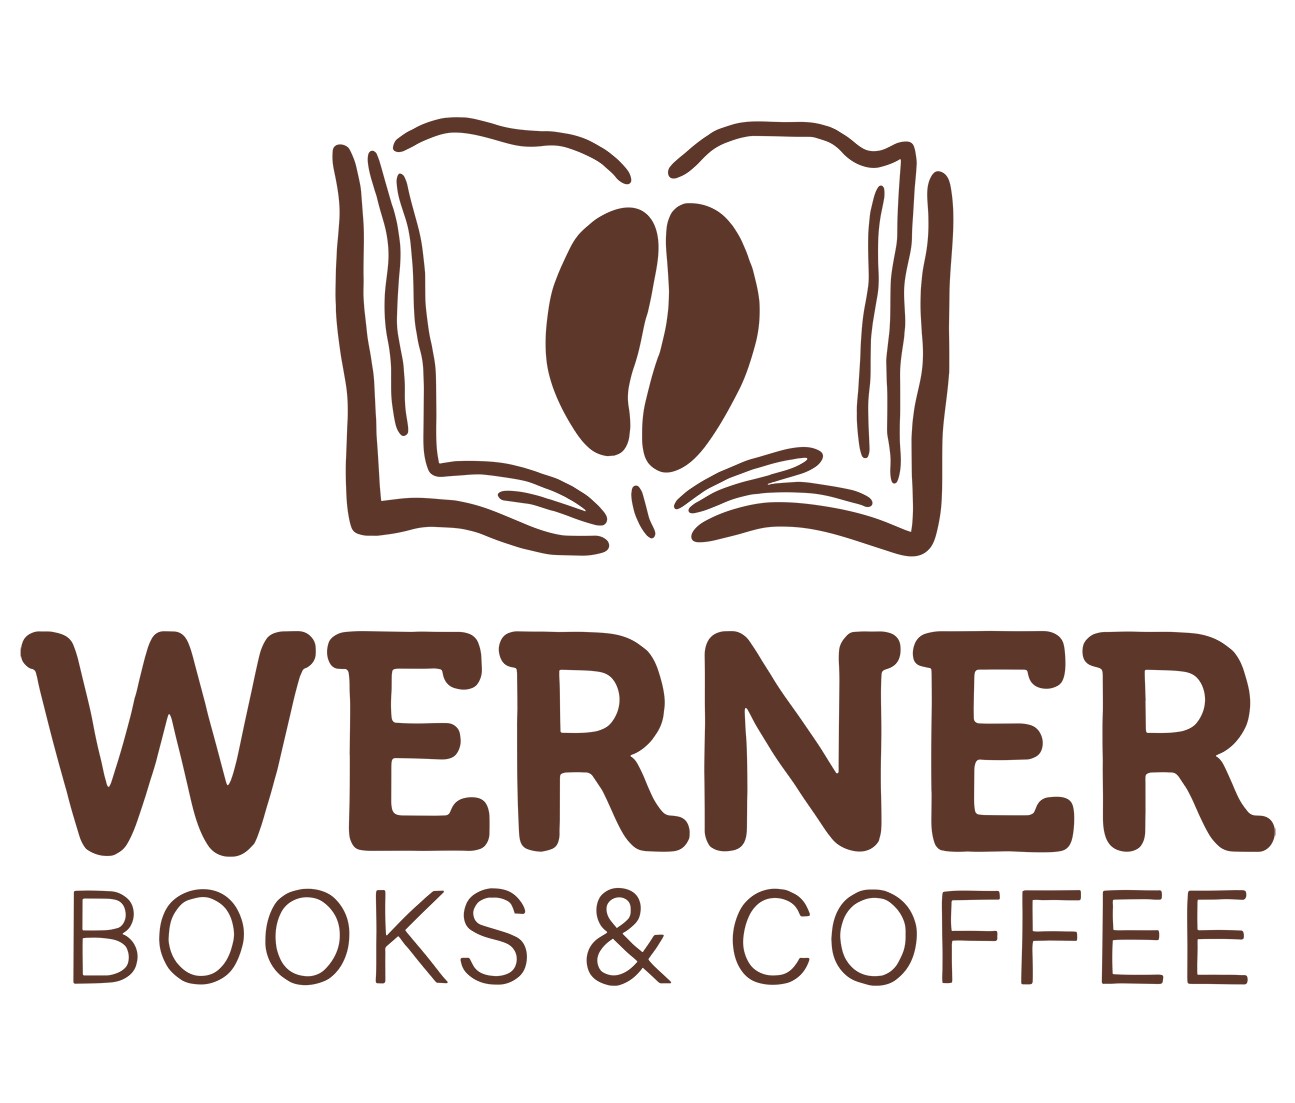 Werner Books & Coffee